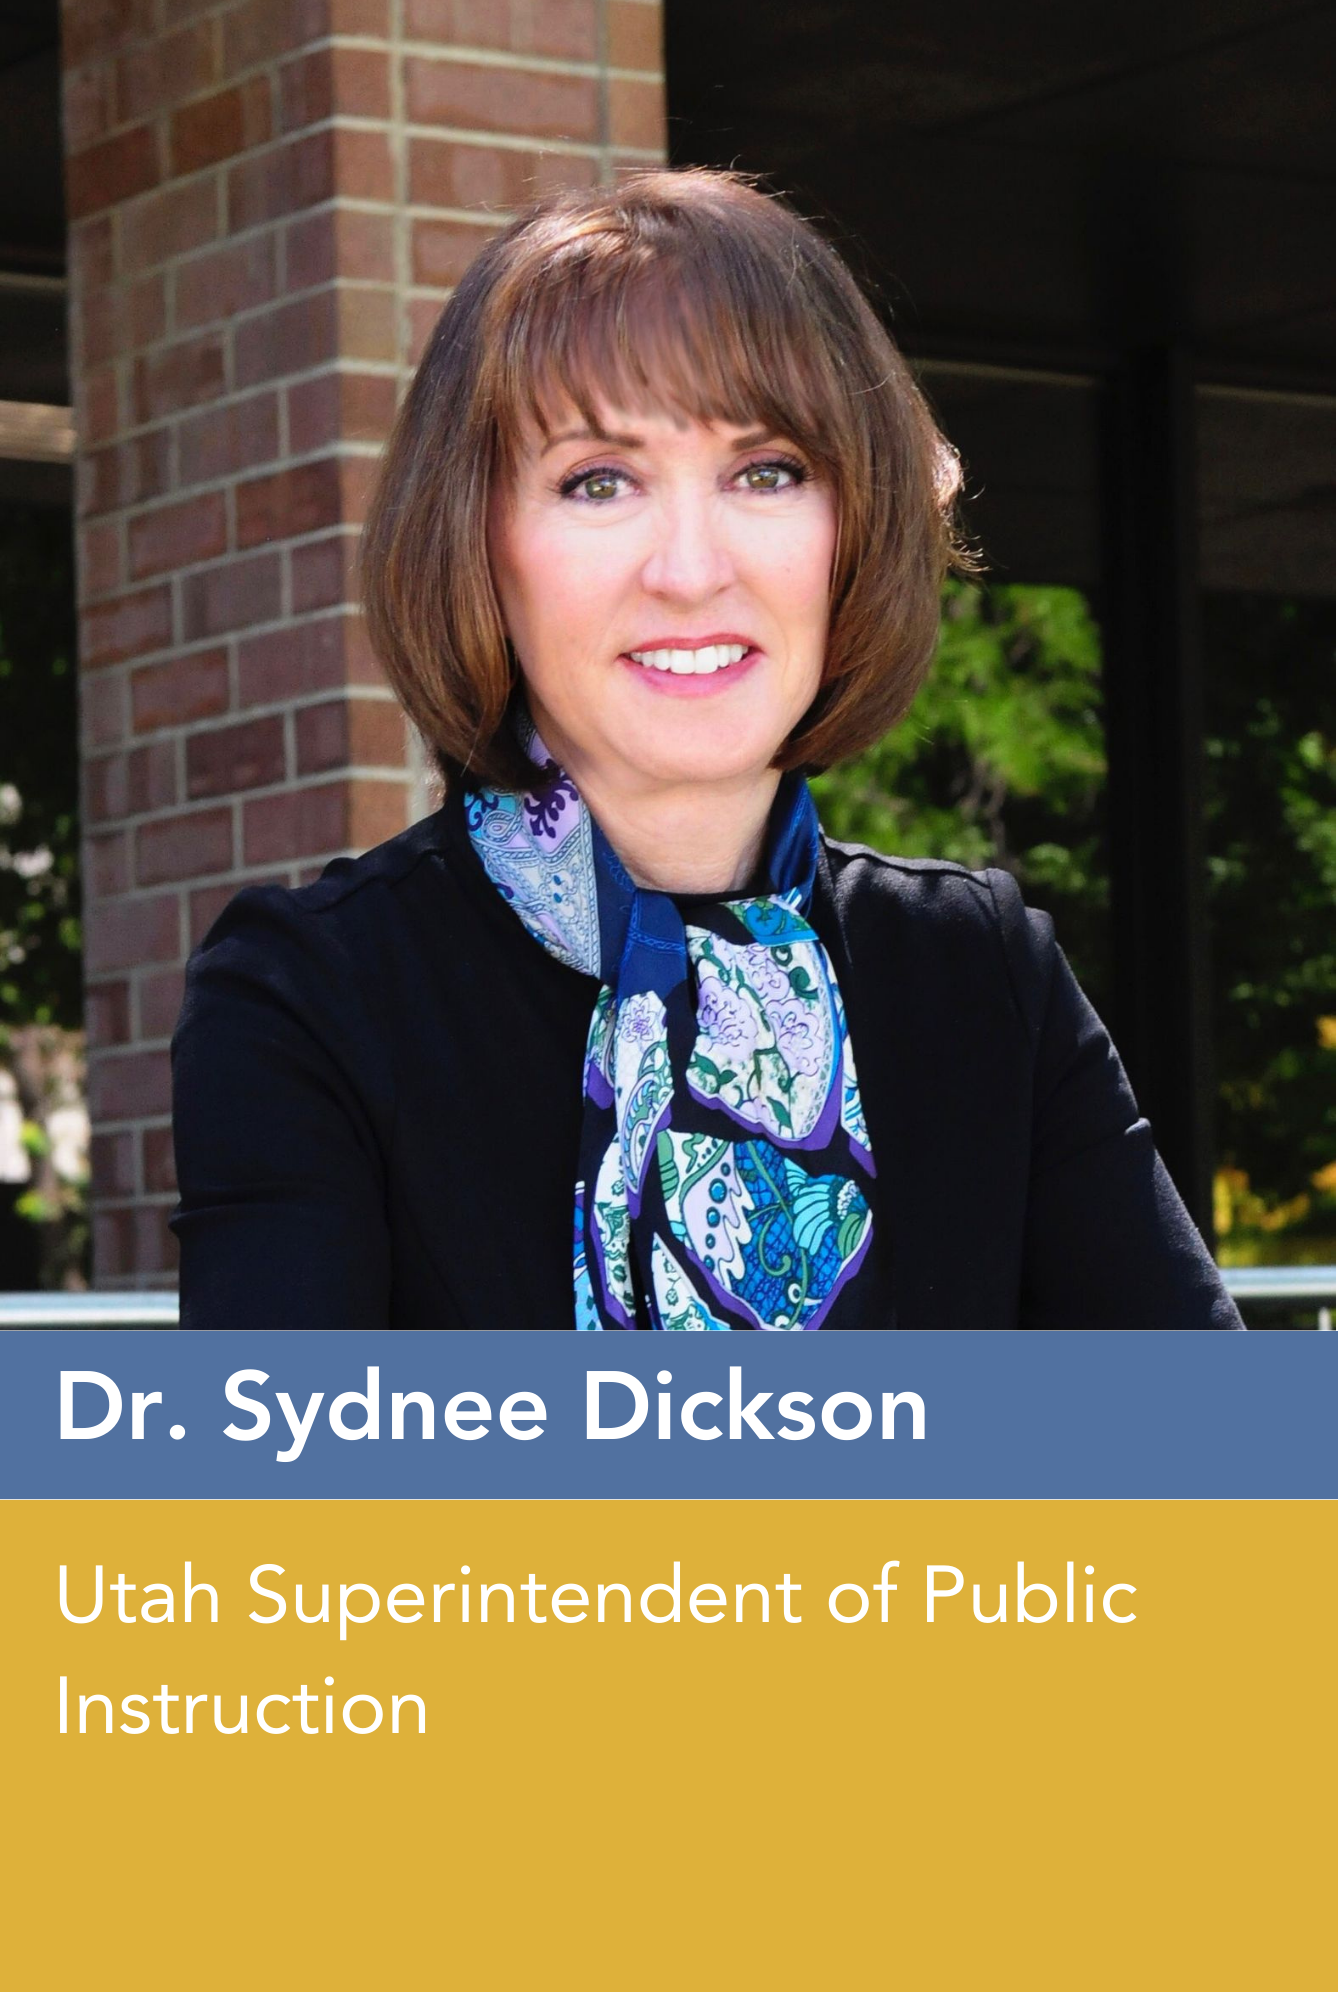 Dr. Sydnee Dickson